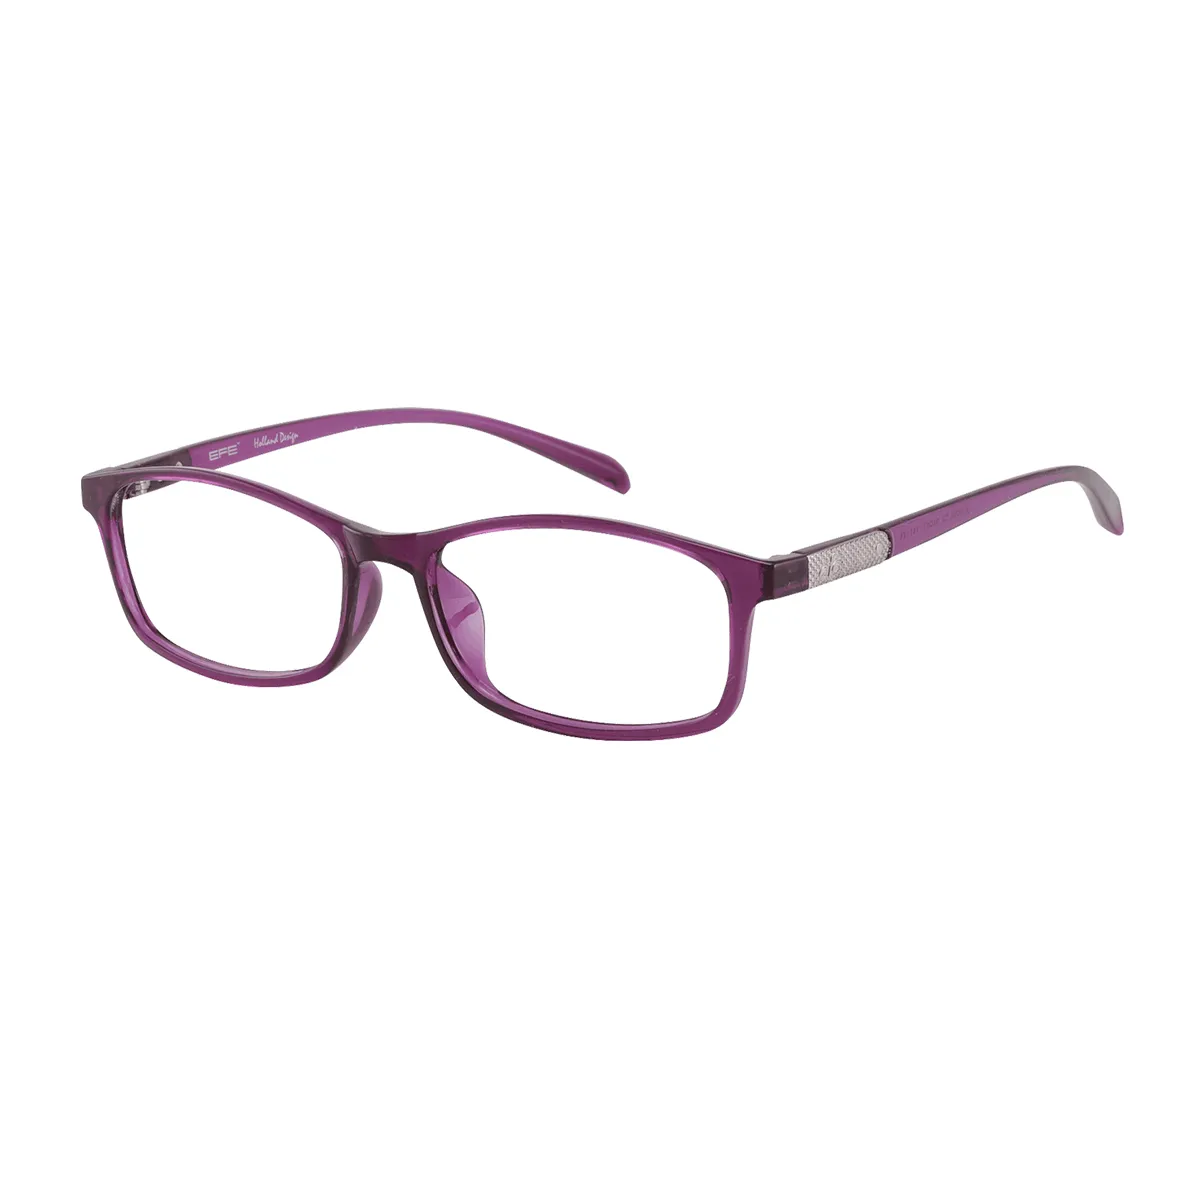 Adkin - Rectangle Purple Glasses for Women - EFE